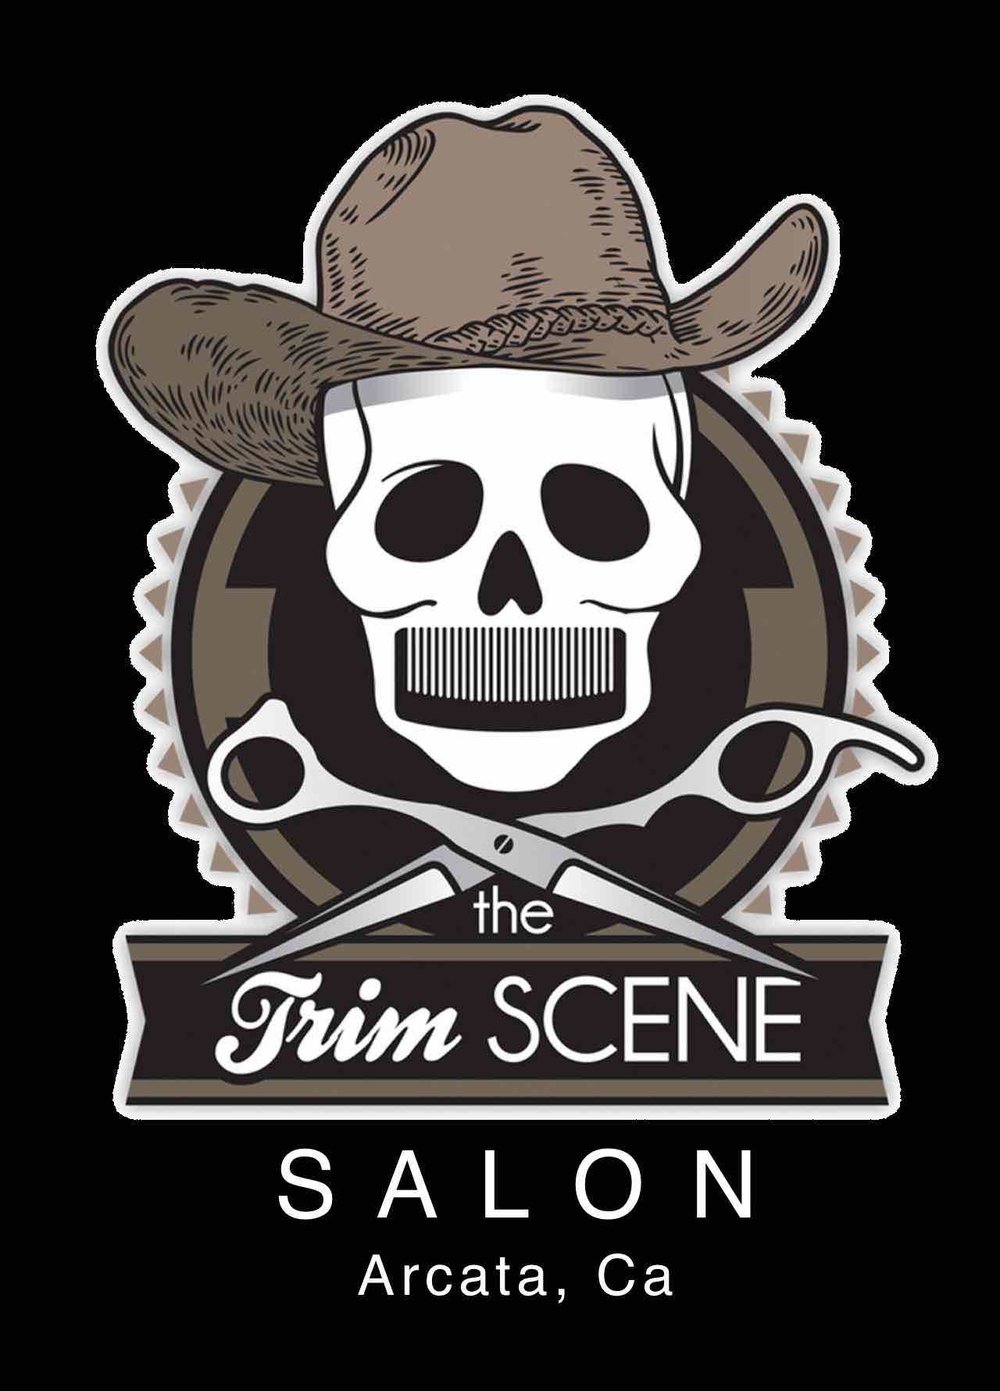 THE TRIM SCENE SALON